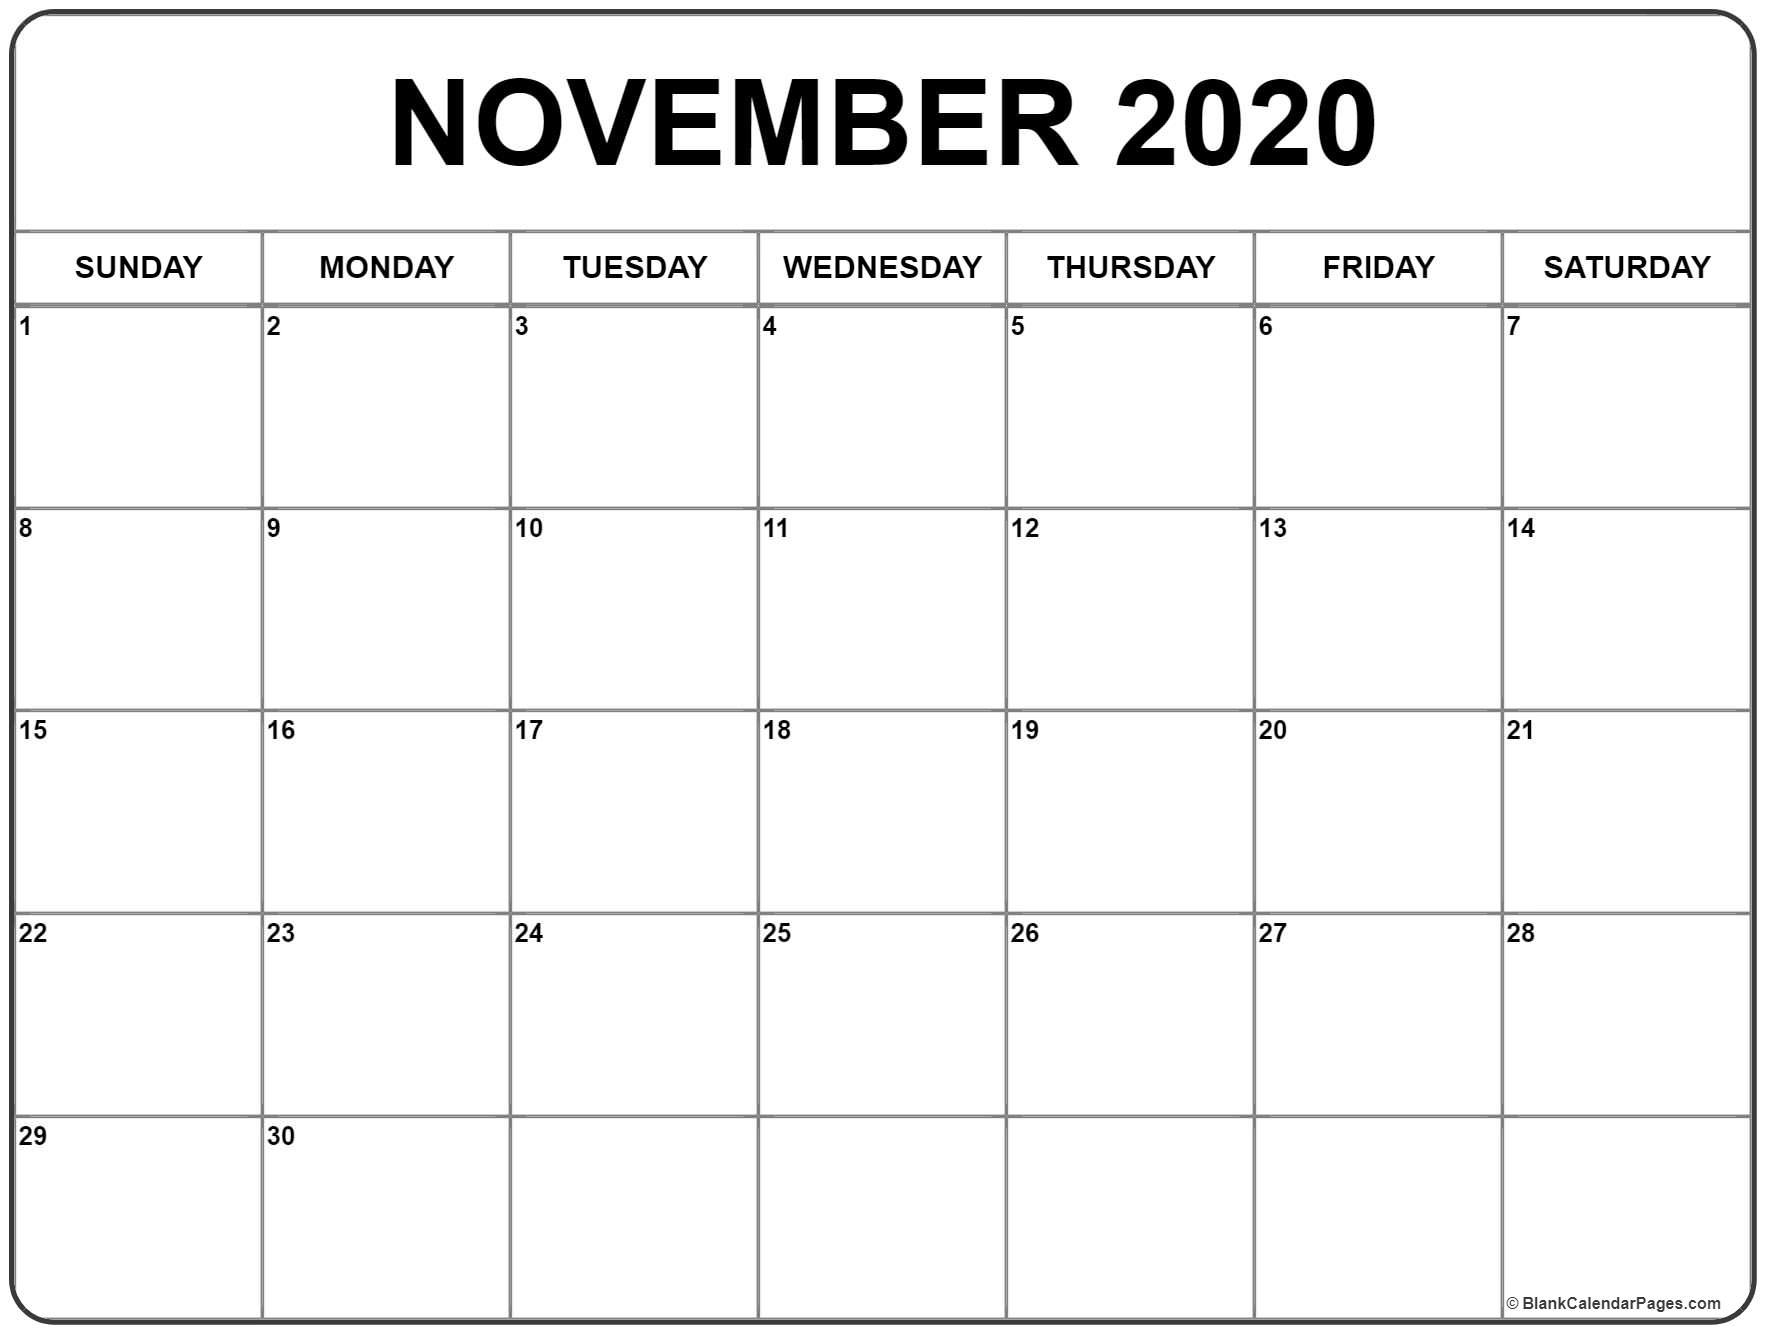 November 2020 Calendars To Print - Togo.wpart.co